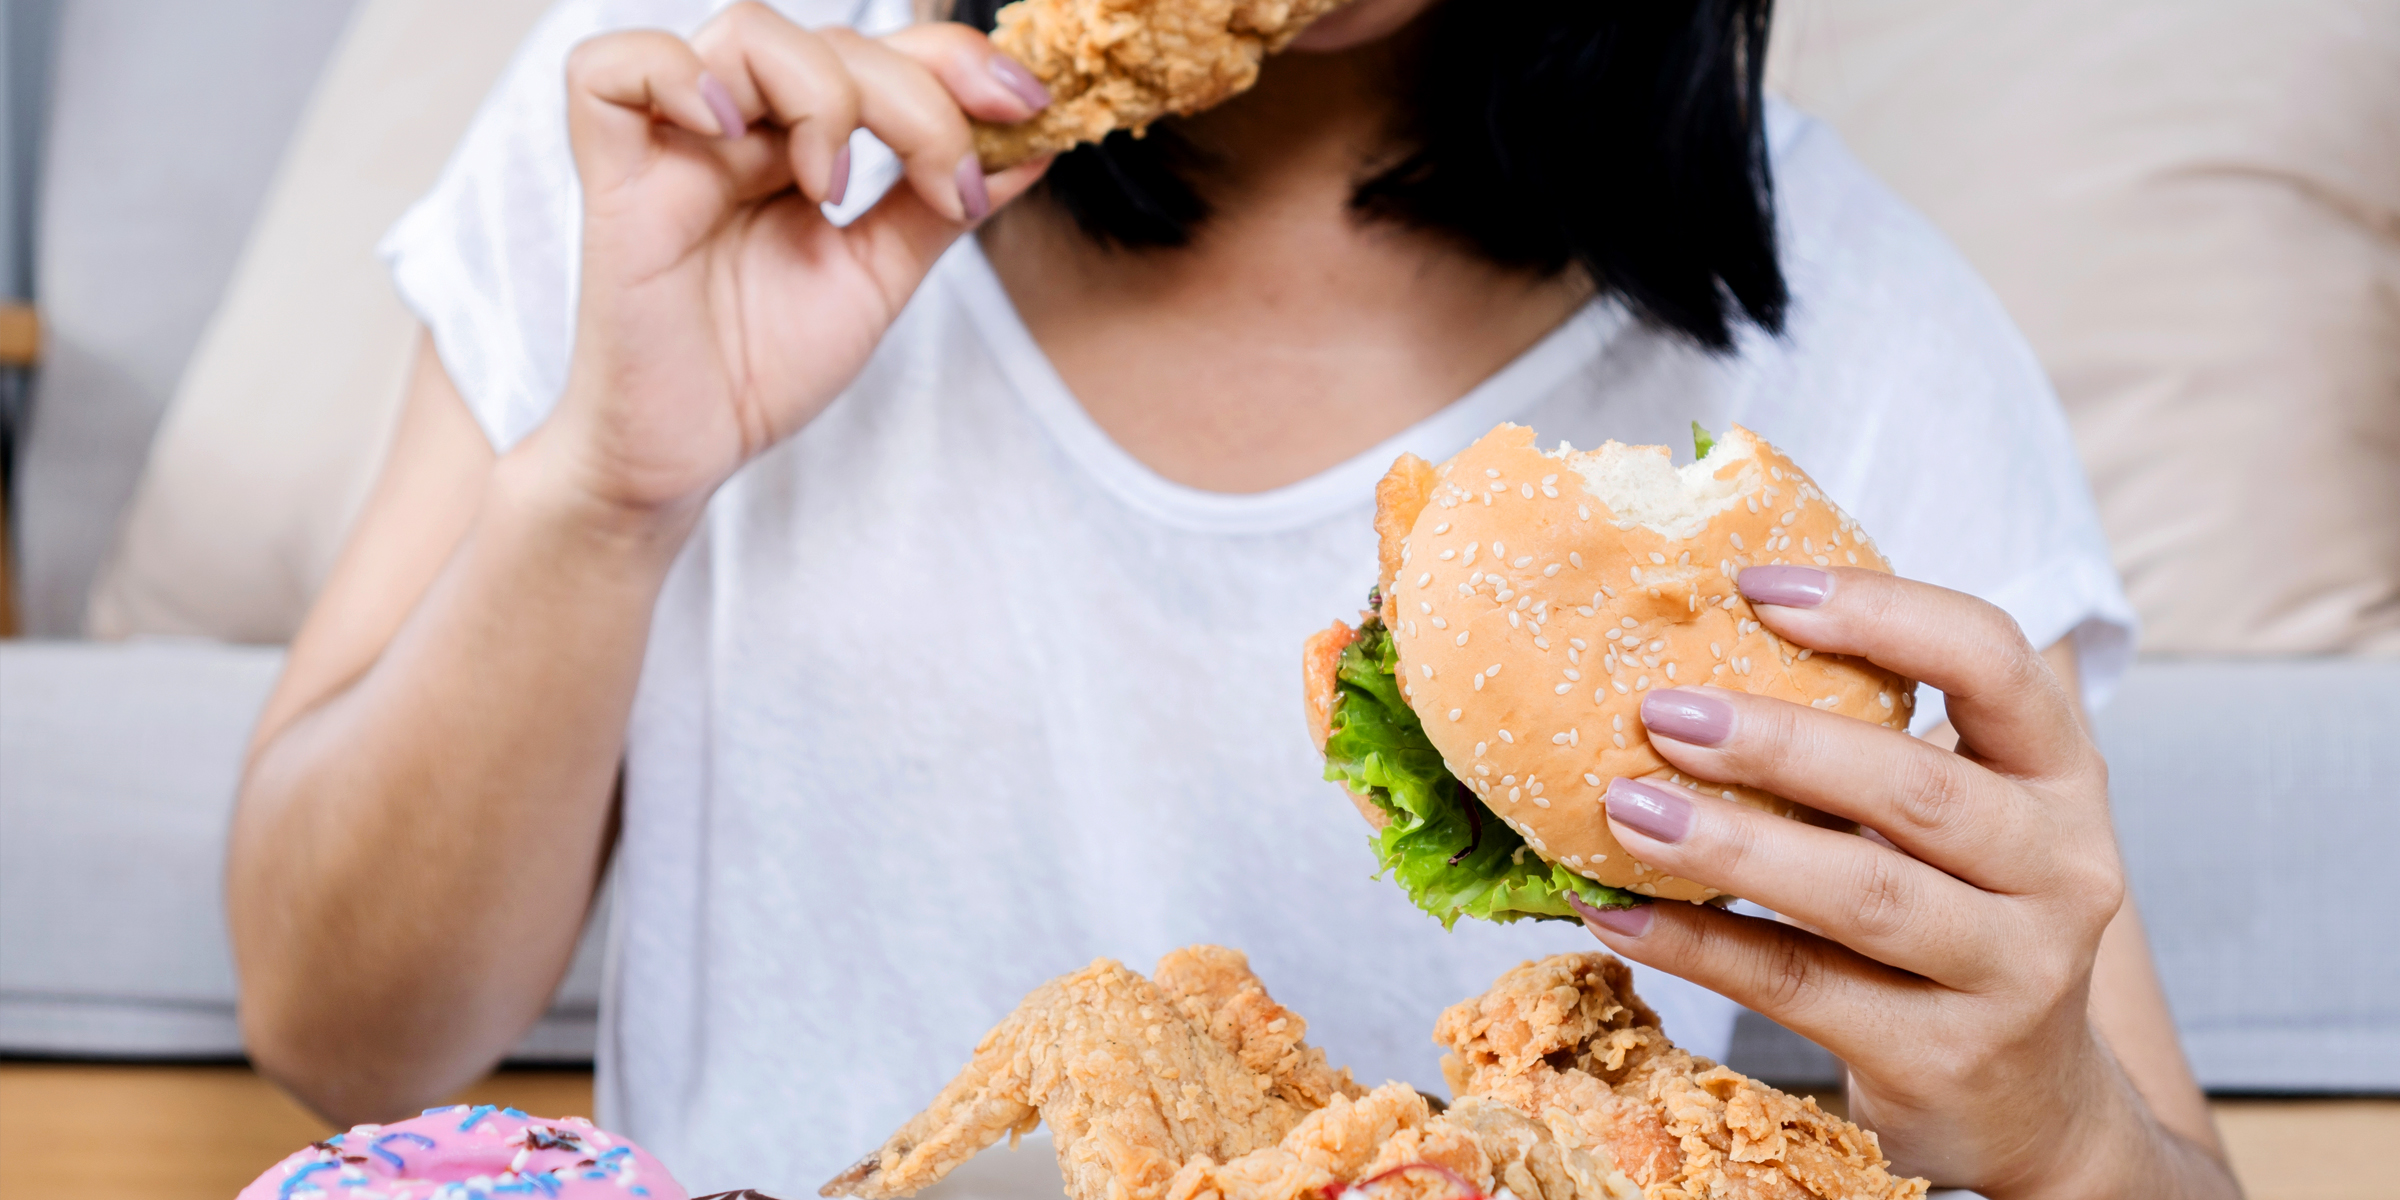 Frau isst einen Burger | Quelle: Shutterstock